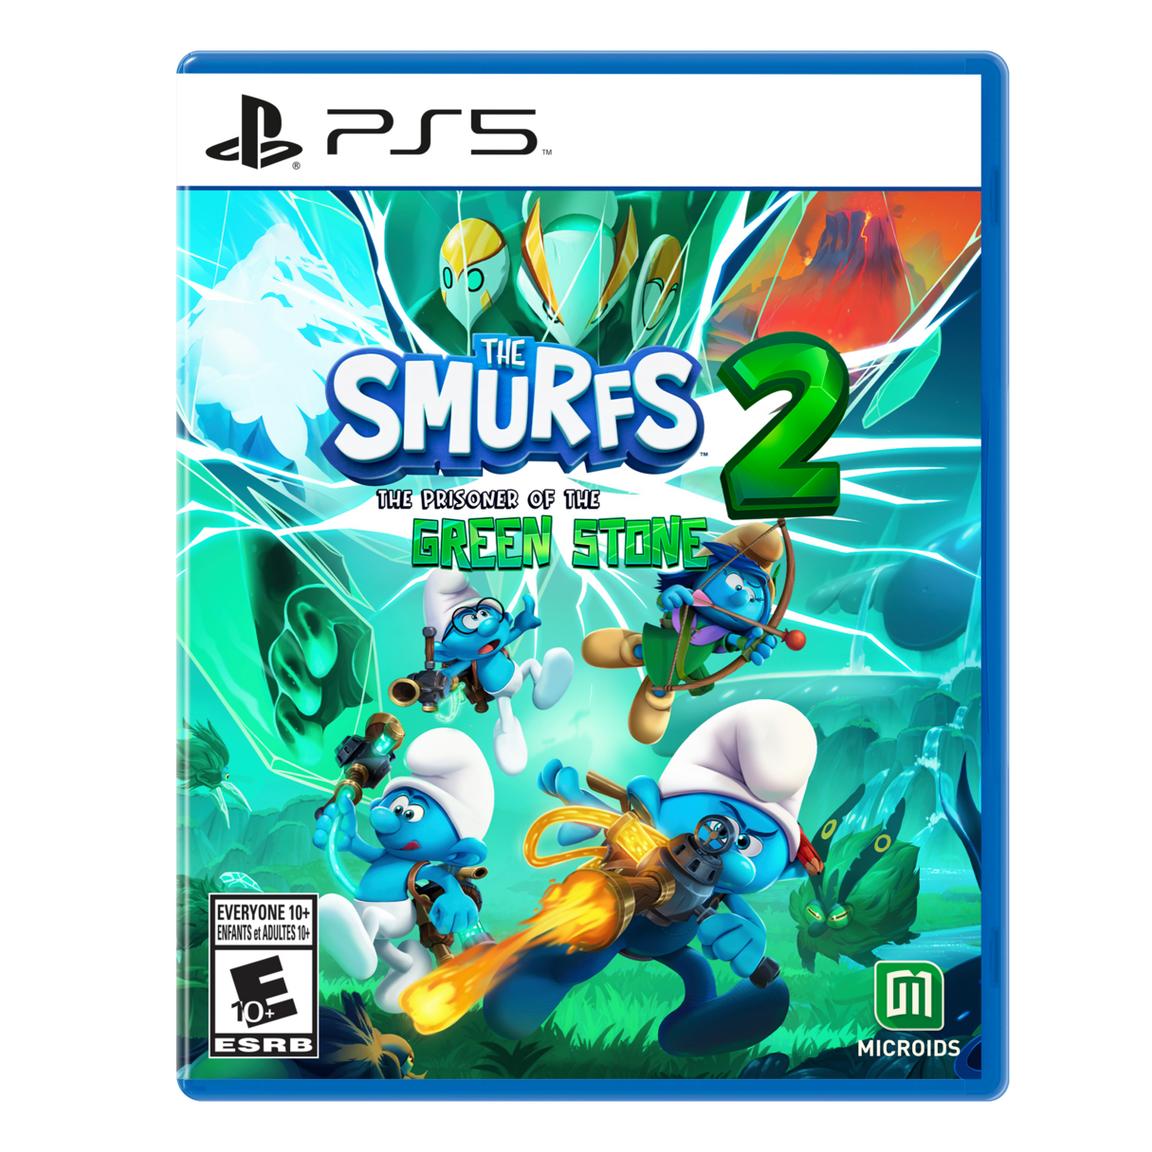 Видеоигра The Smurfs 2: Prisoner of the Green Stone - PlayStation 5 xbox игра microids asterix